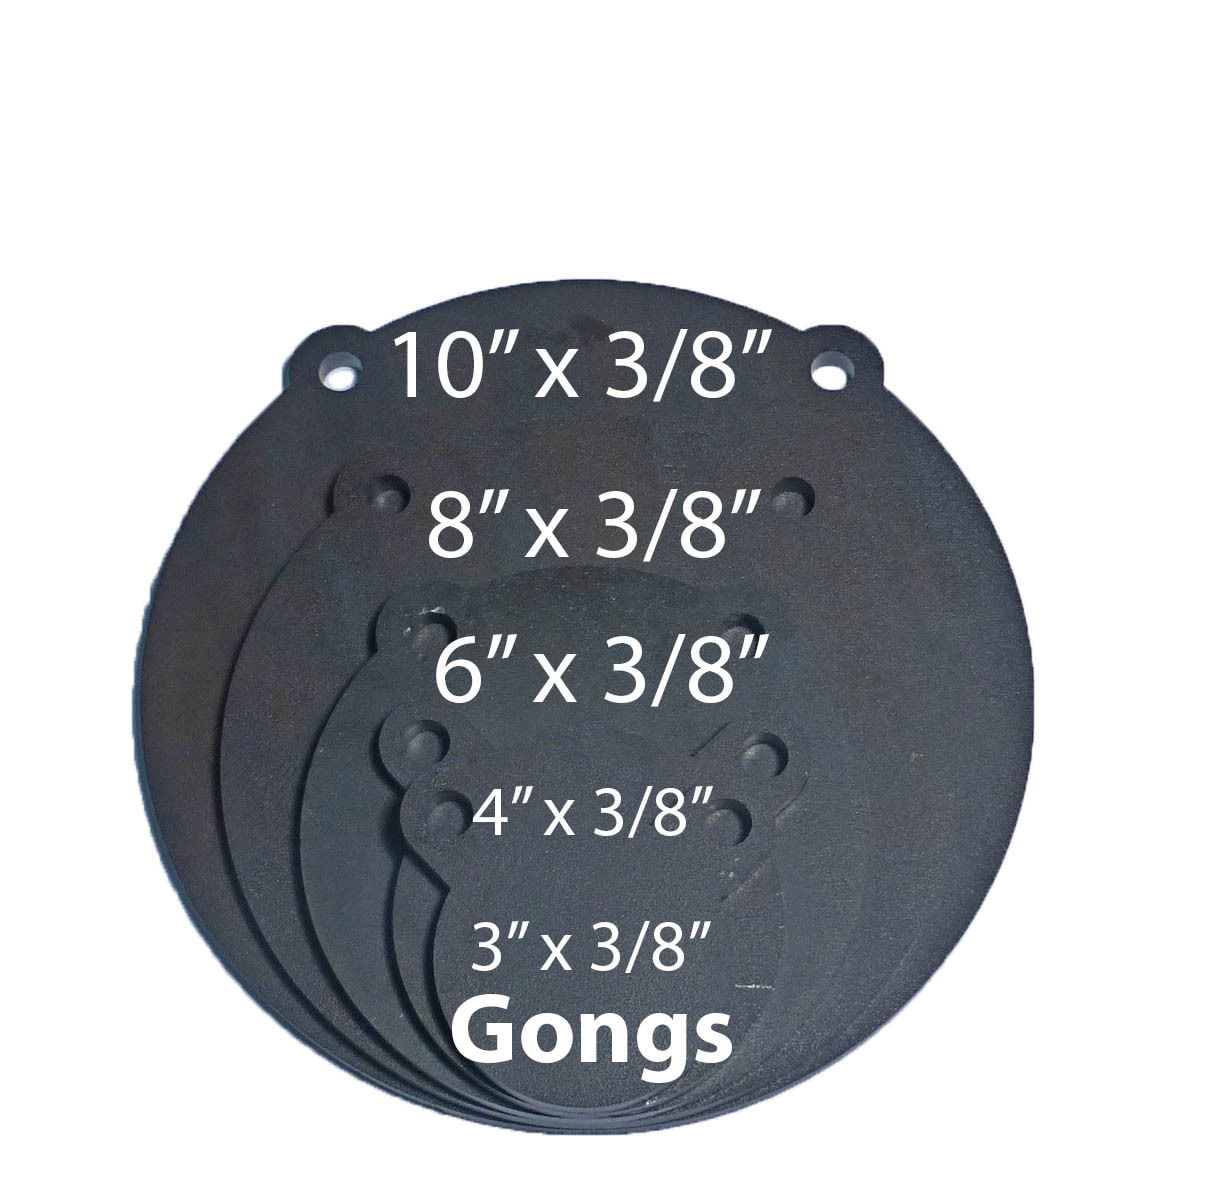 3ct 1/2" AR500 3" x 3" Half Gong Steel Target Practice Plate High Caliber